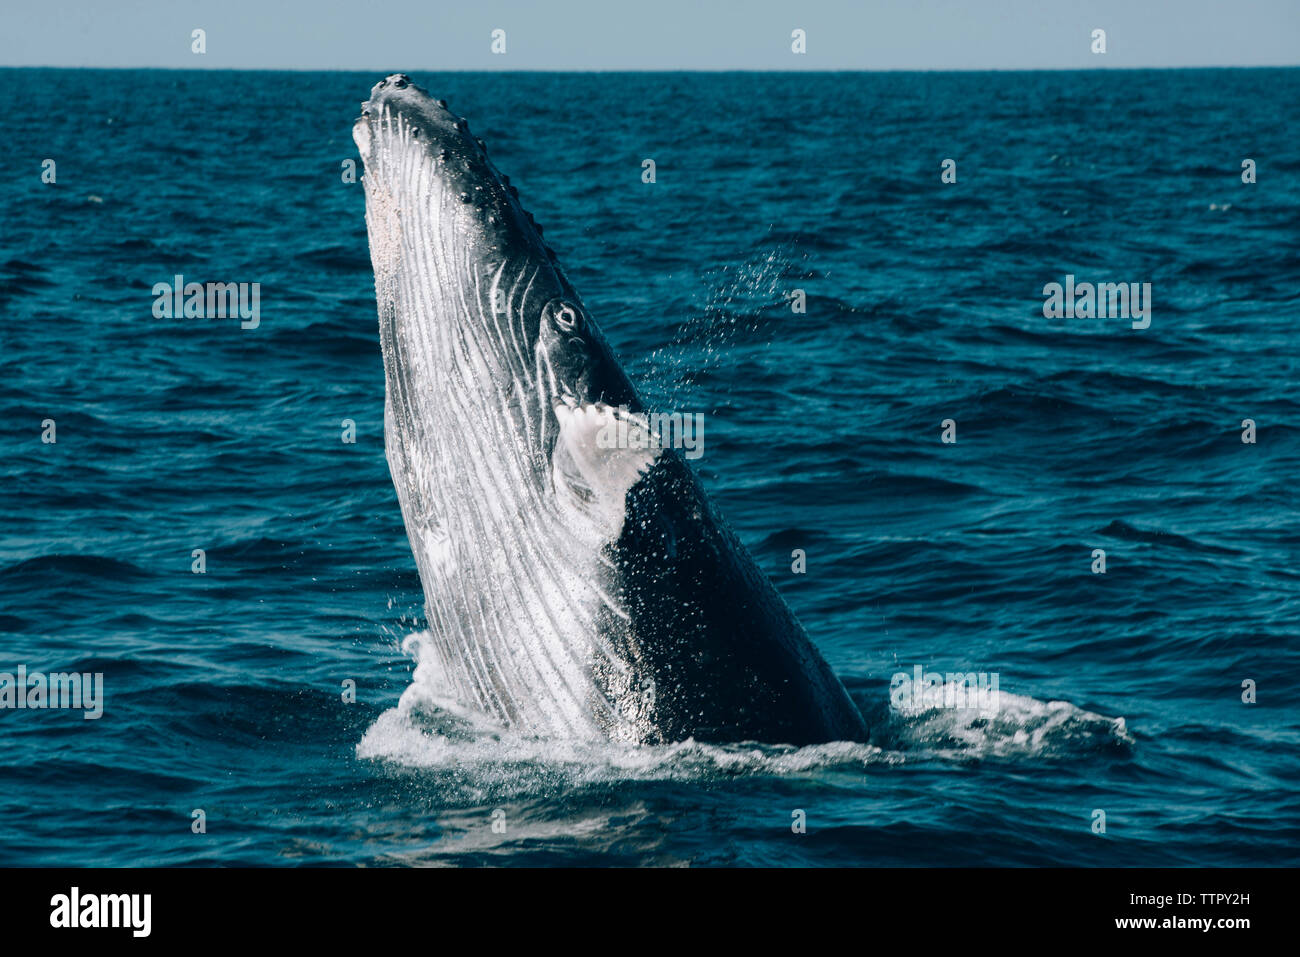 Humpback Whale breaching in sea Stock Photo